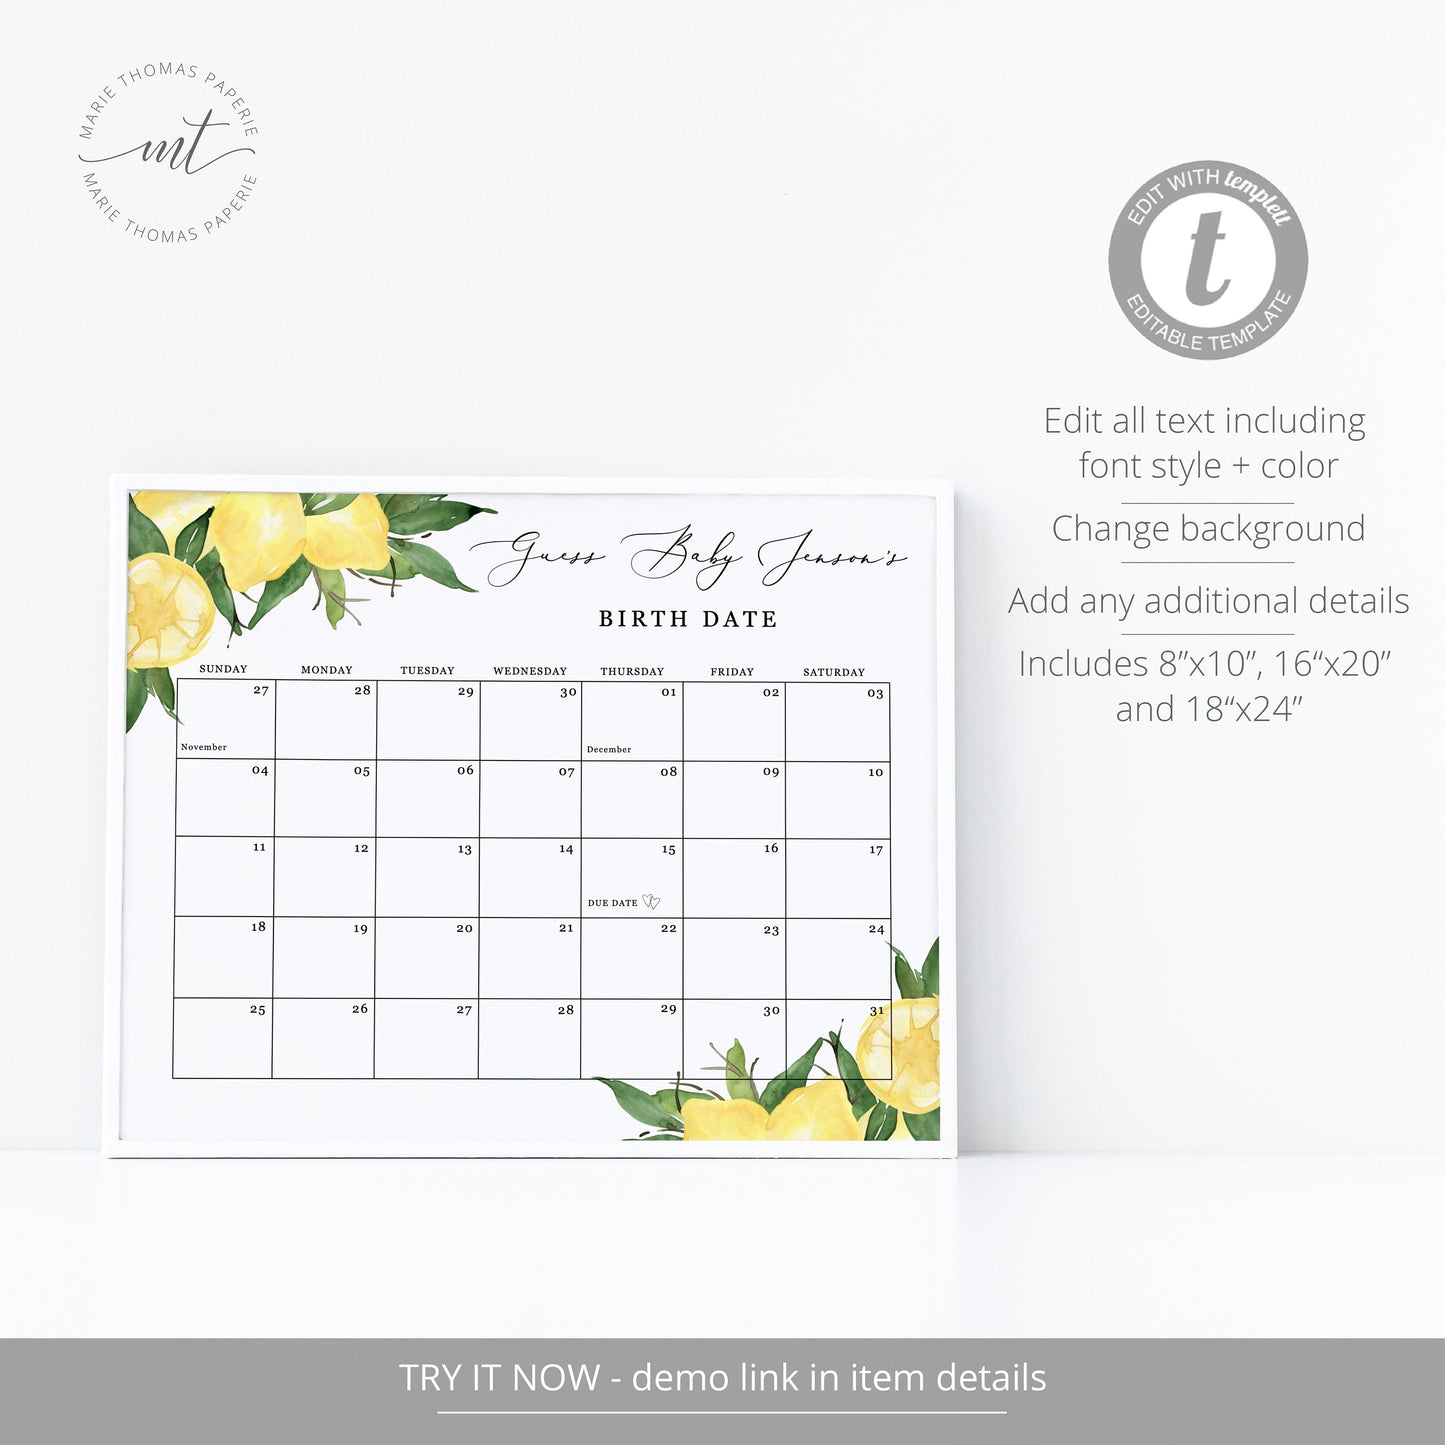 Editable Baby Due Date Calendar Lemon Guess the Birthday Sign Baby Shower Guess the Birth Date Template